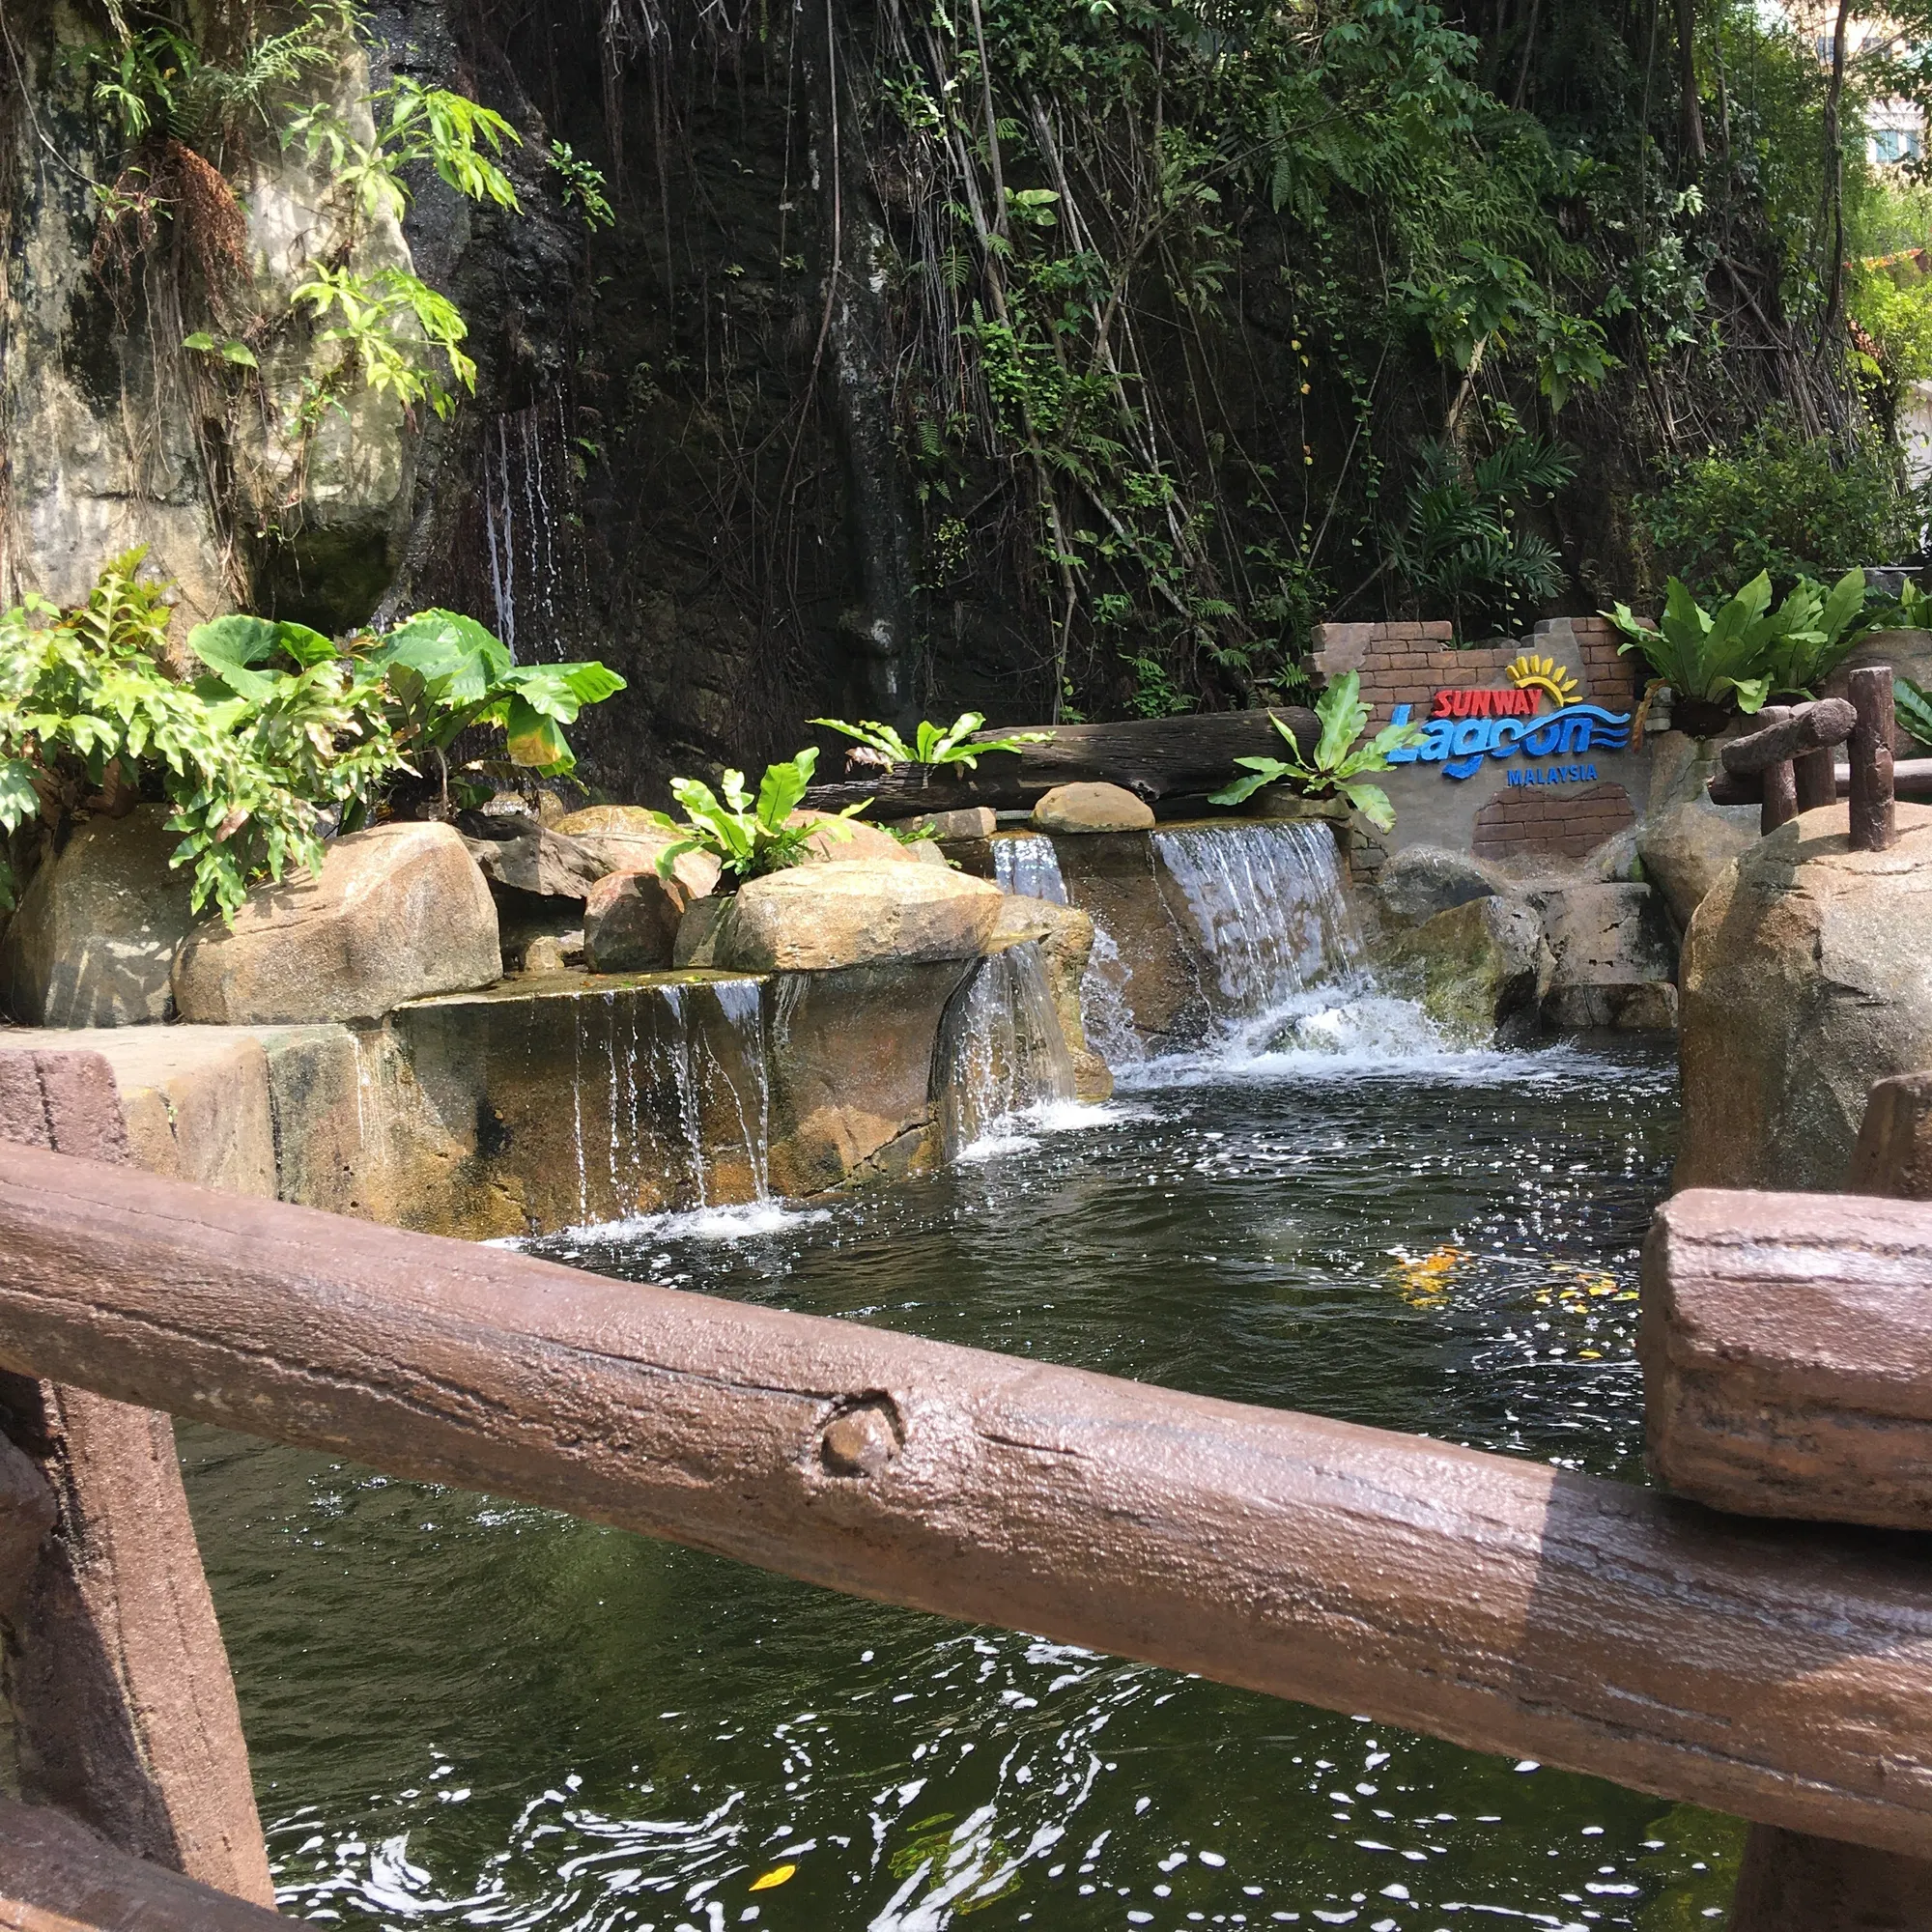 sunway lagoon theme park